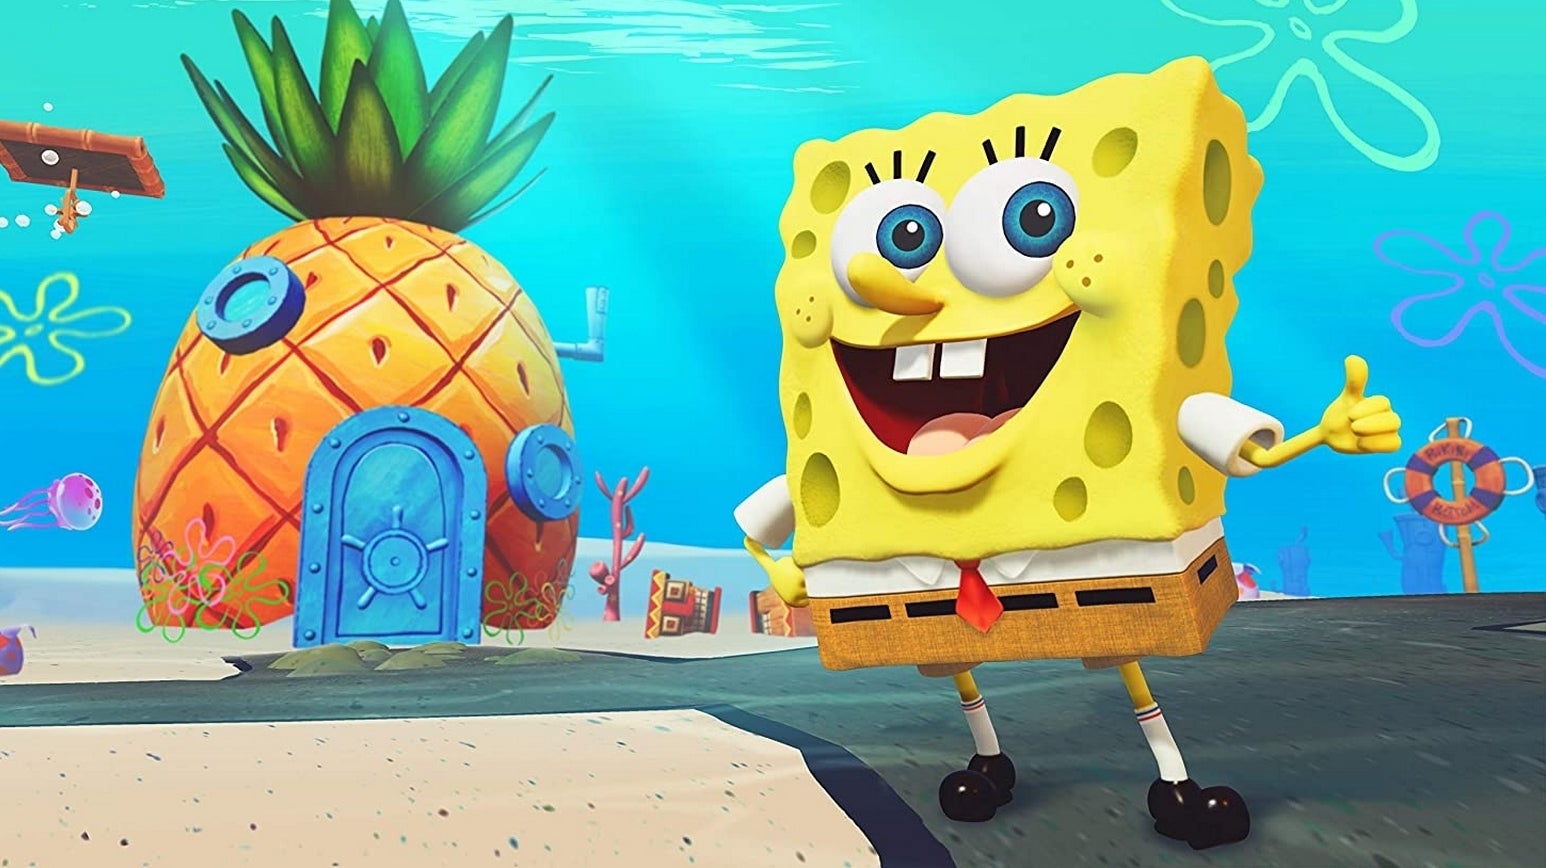 Bilder zu SpongeBob SquarePants: Battle for Bikini Bottom - Rehydrated erscheint am 23. Juni